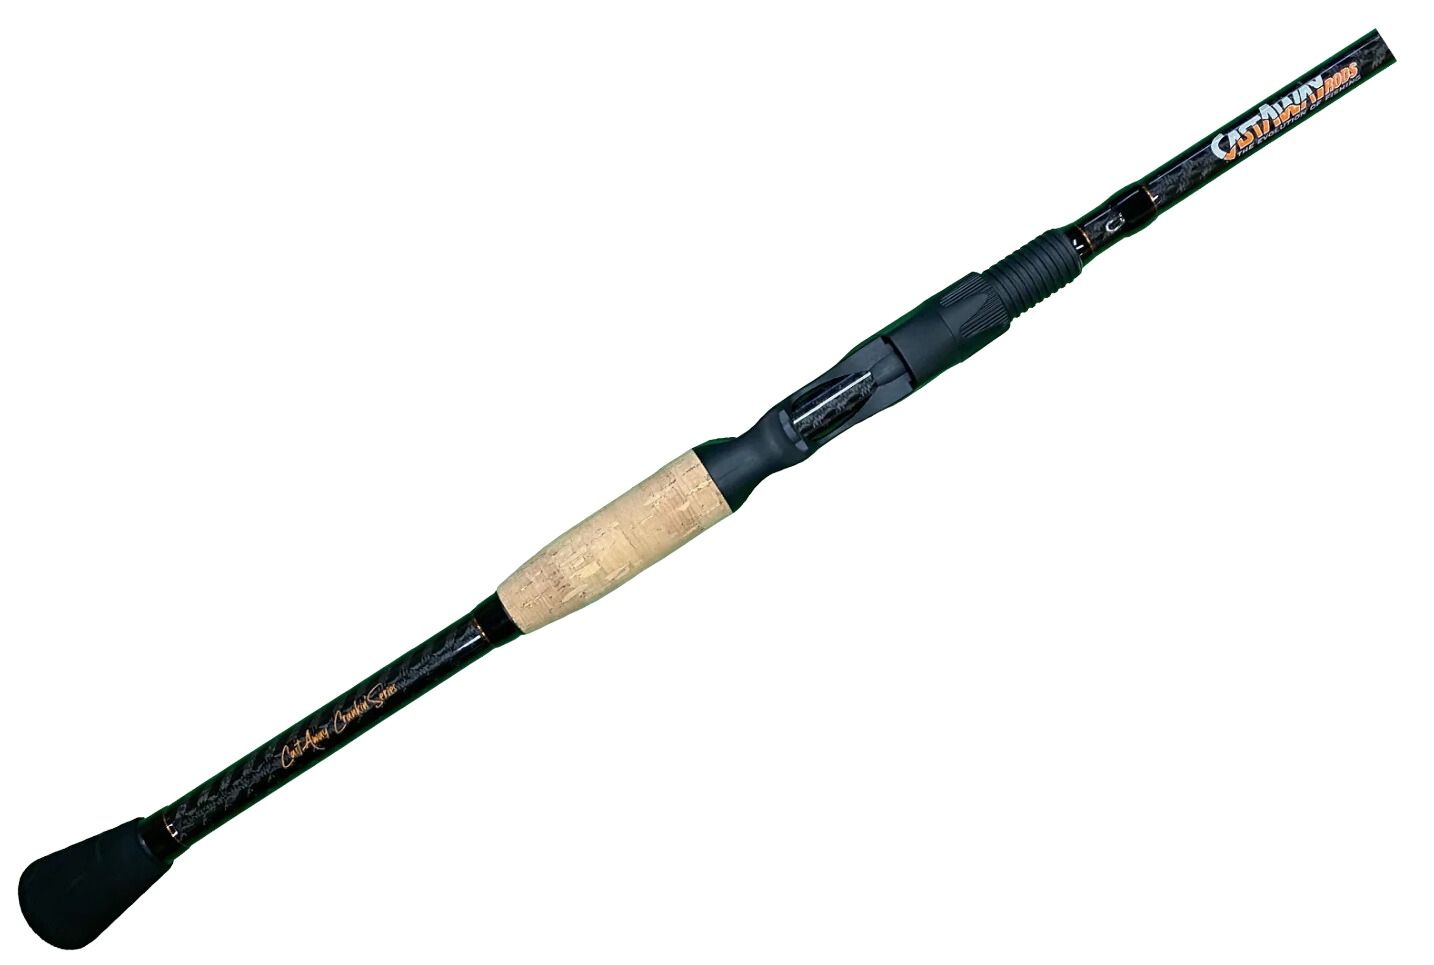 Castaway Rods Pro Sport PSW66 6'6' Medium Heavy Casting Rod